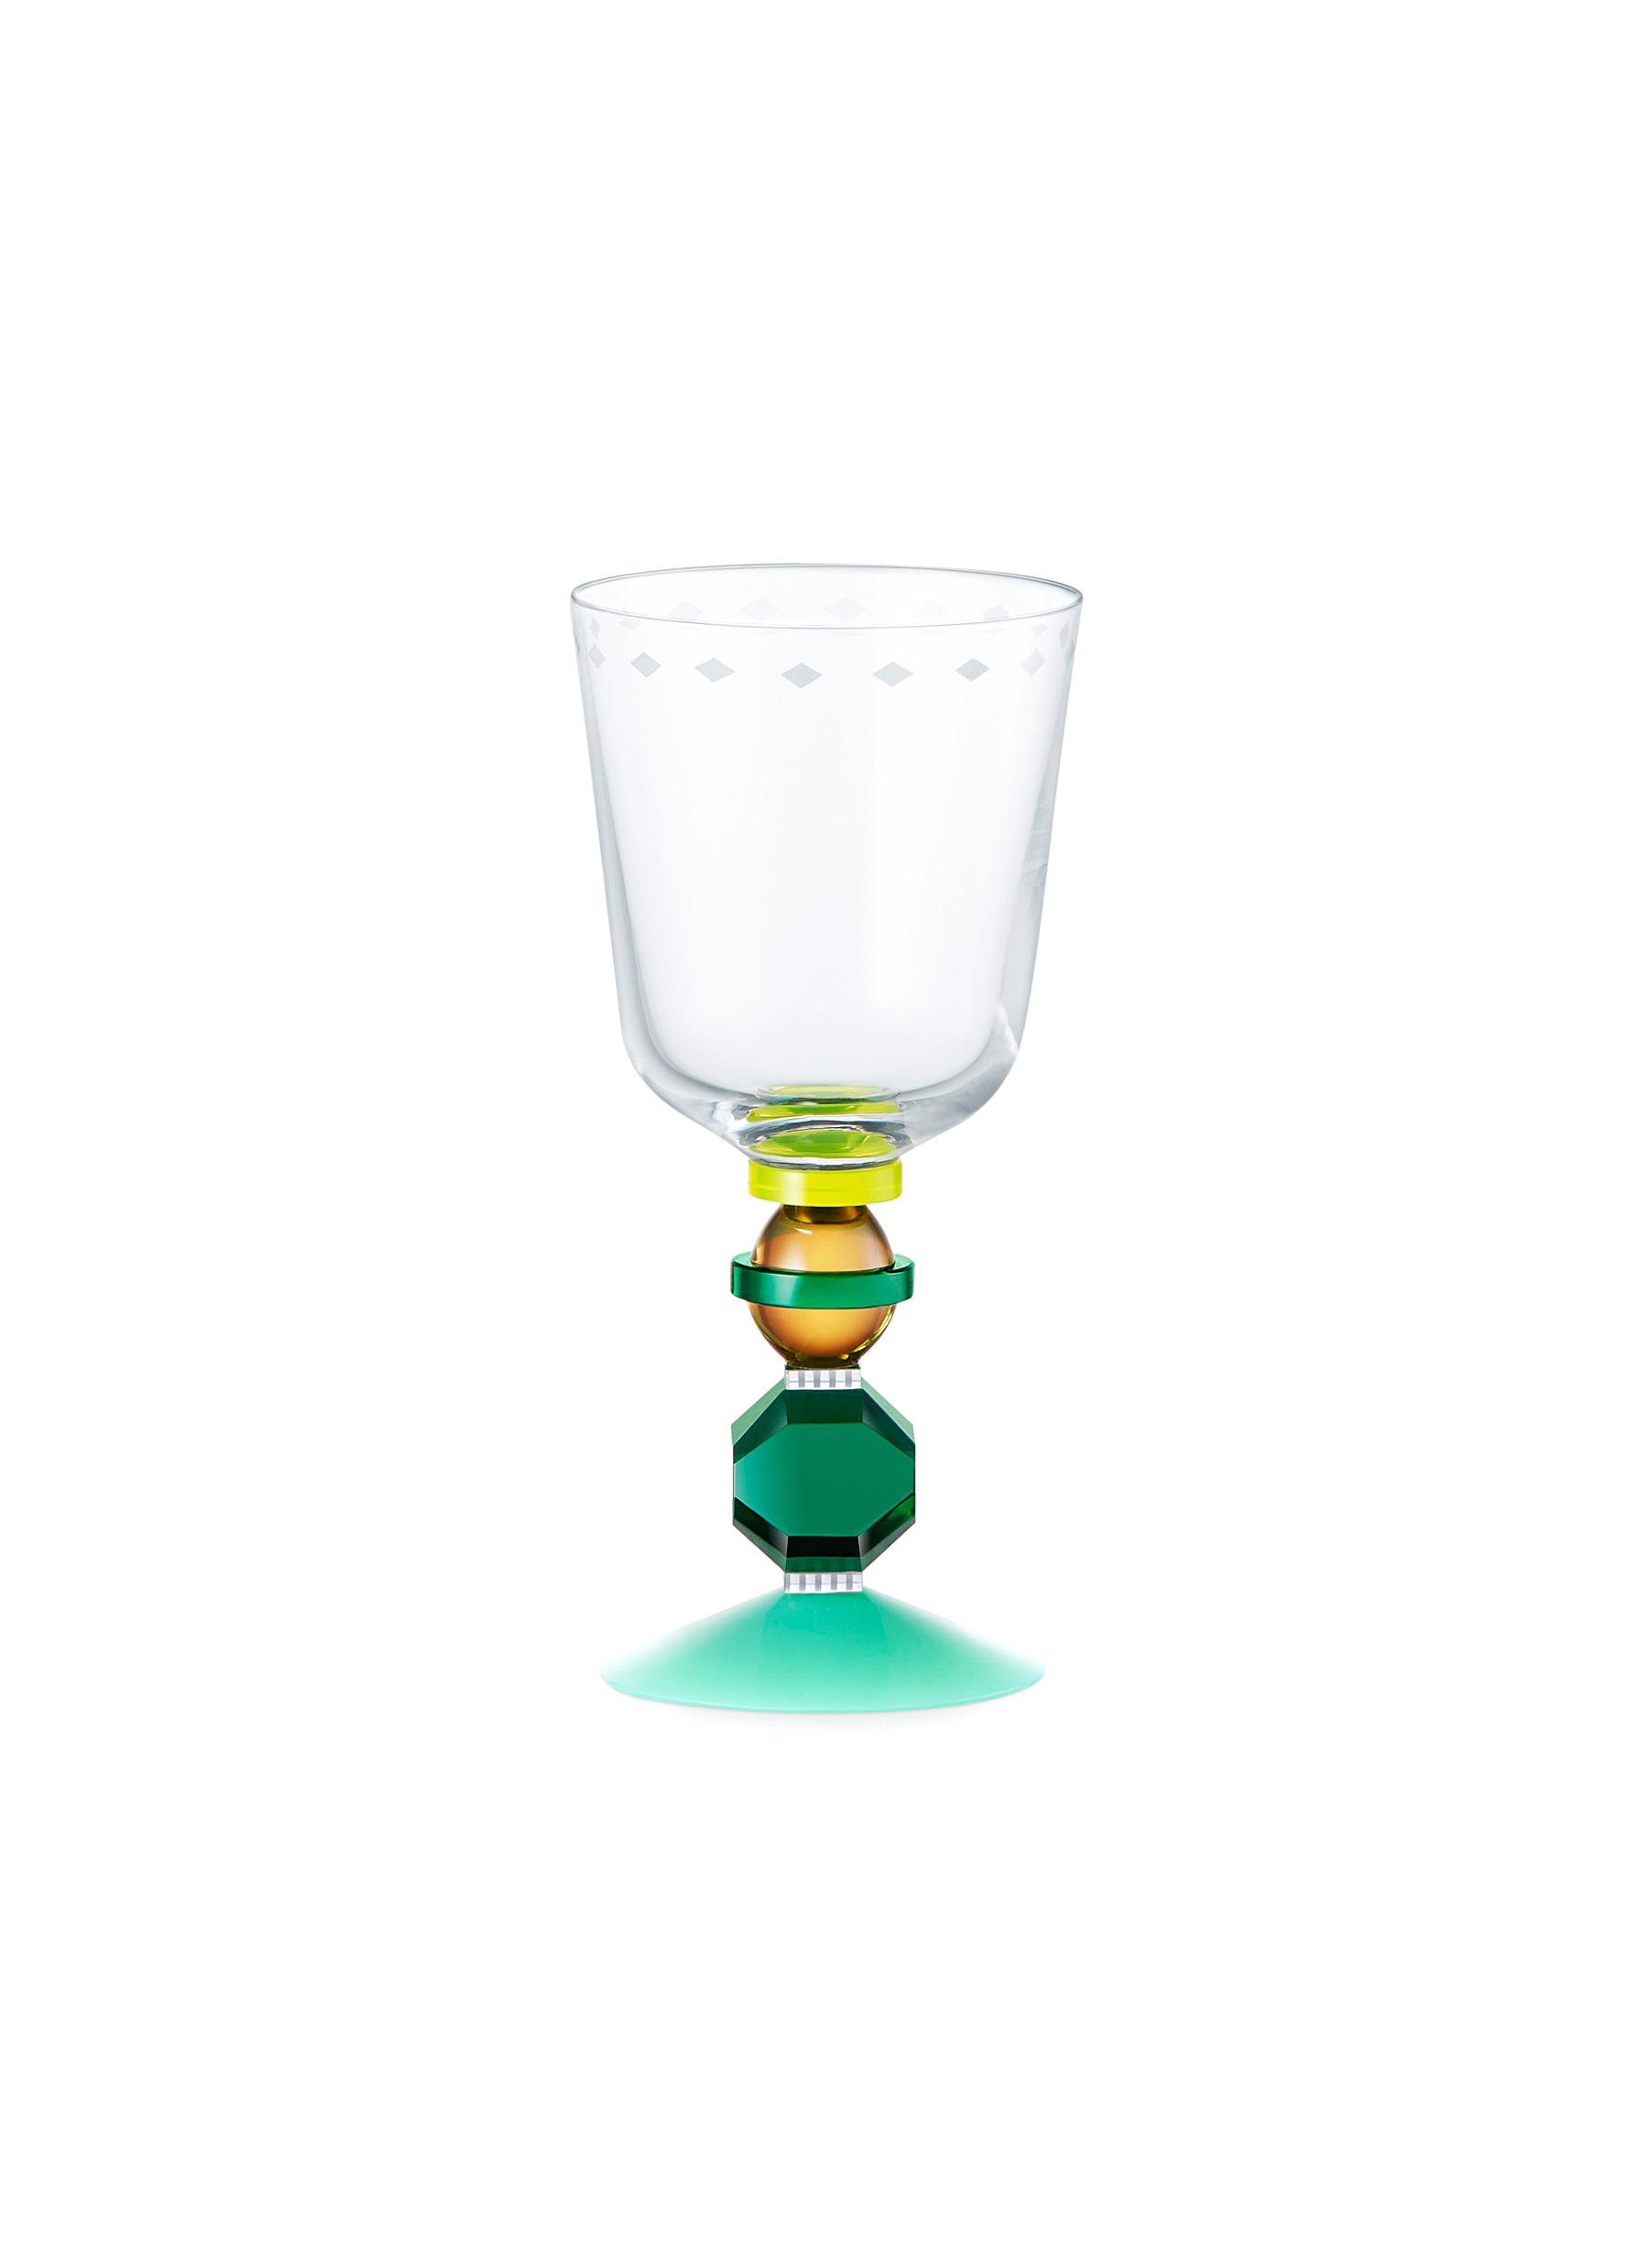 REFLECTIONS COPENHAGEN MAYFAIR SHORT CRYSTAL GLASS SET OF 2 - CLEAR/EMERALD/BROWN/MINT/BRIGHT YELLOW